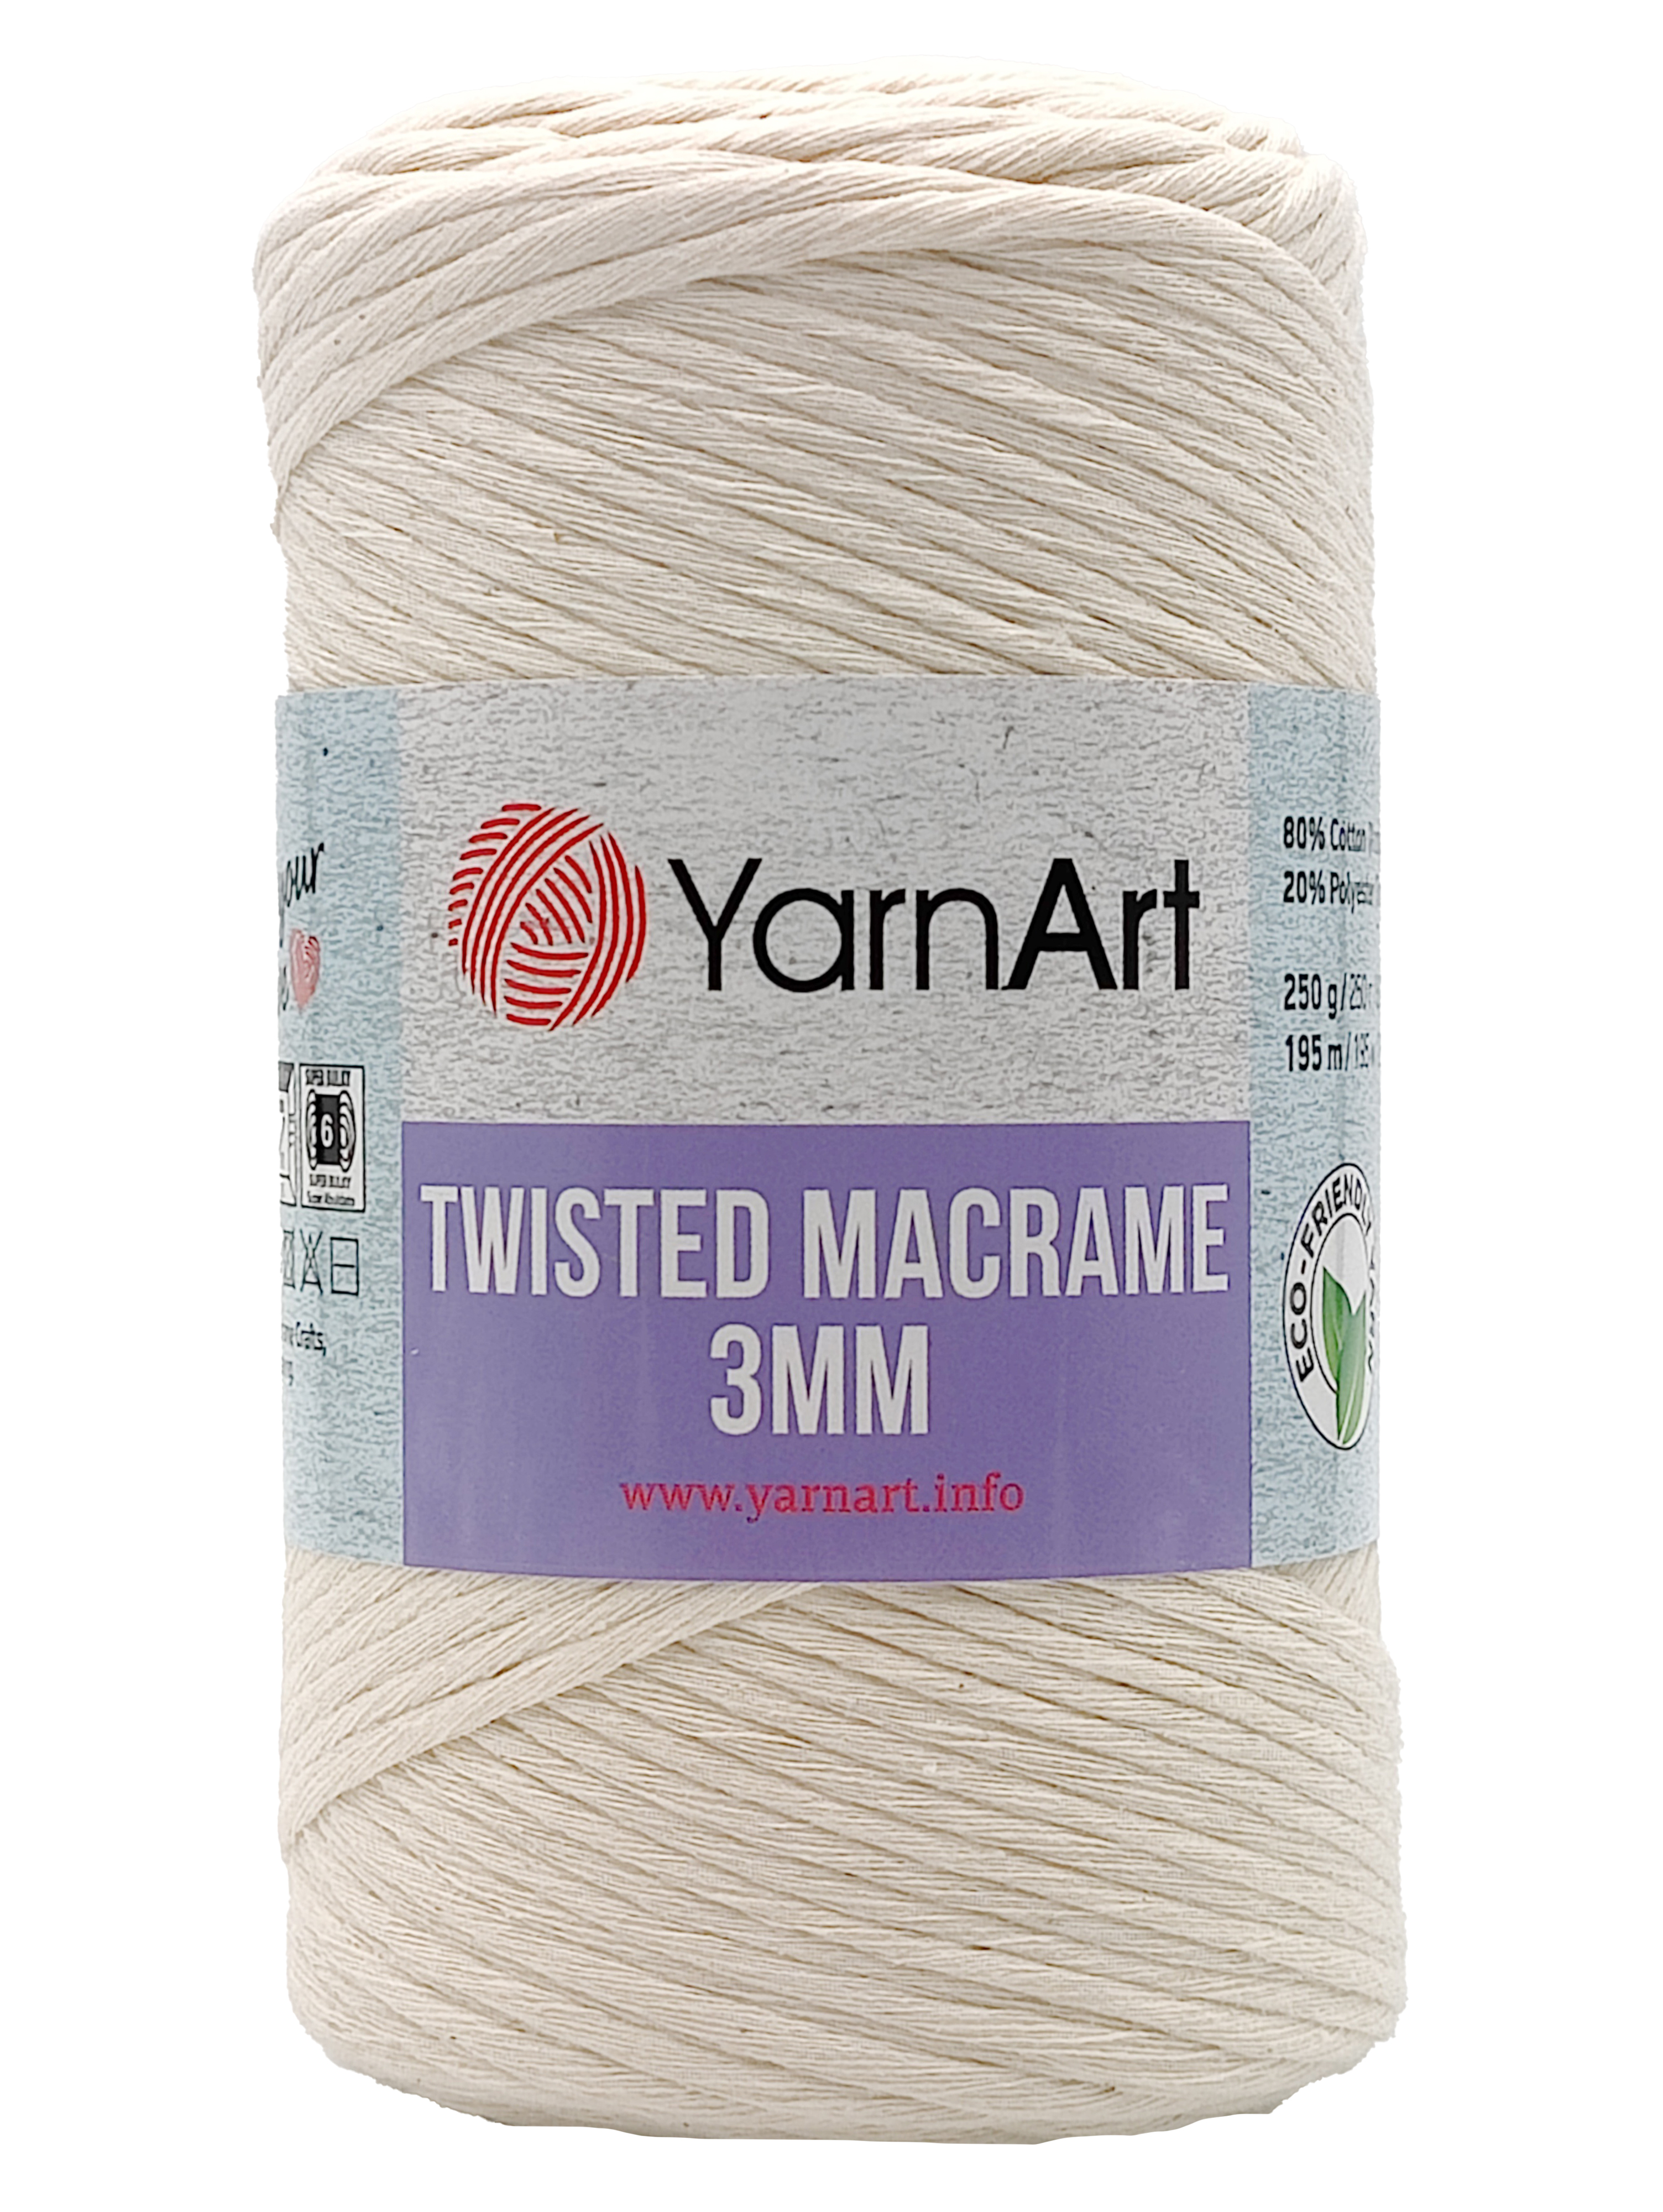 YarnArt Twisted Macrame